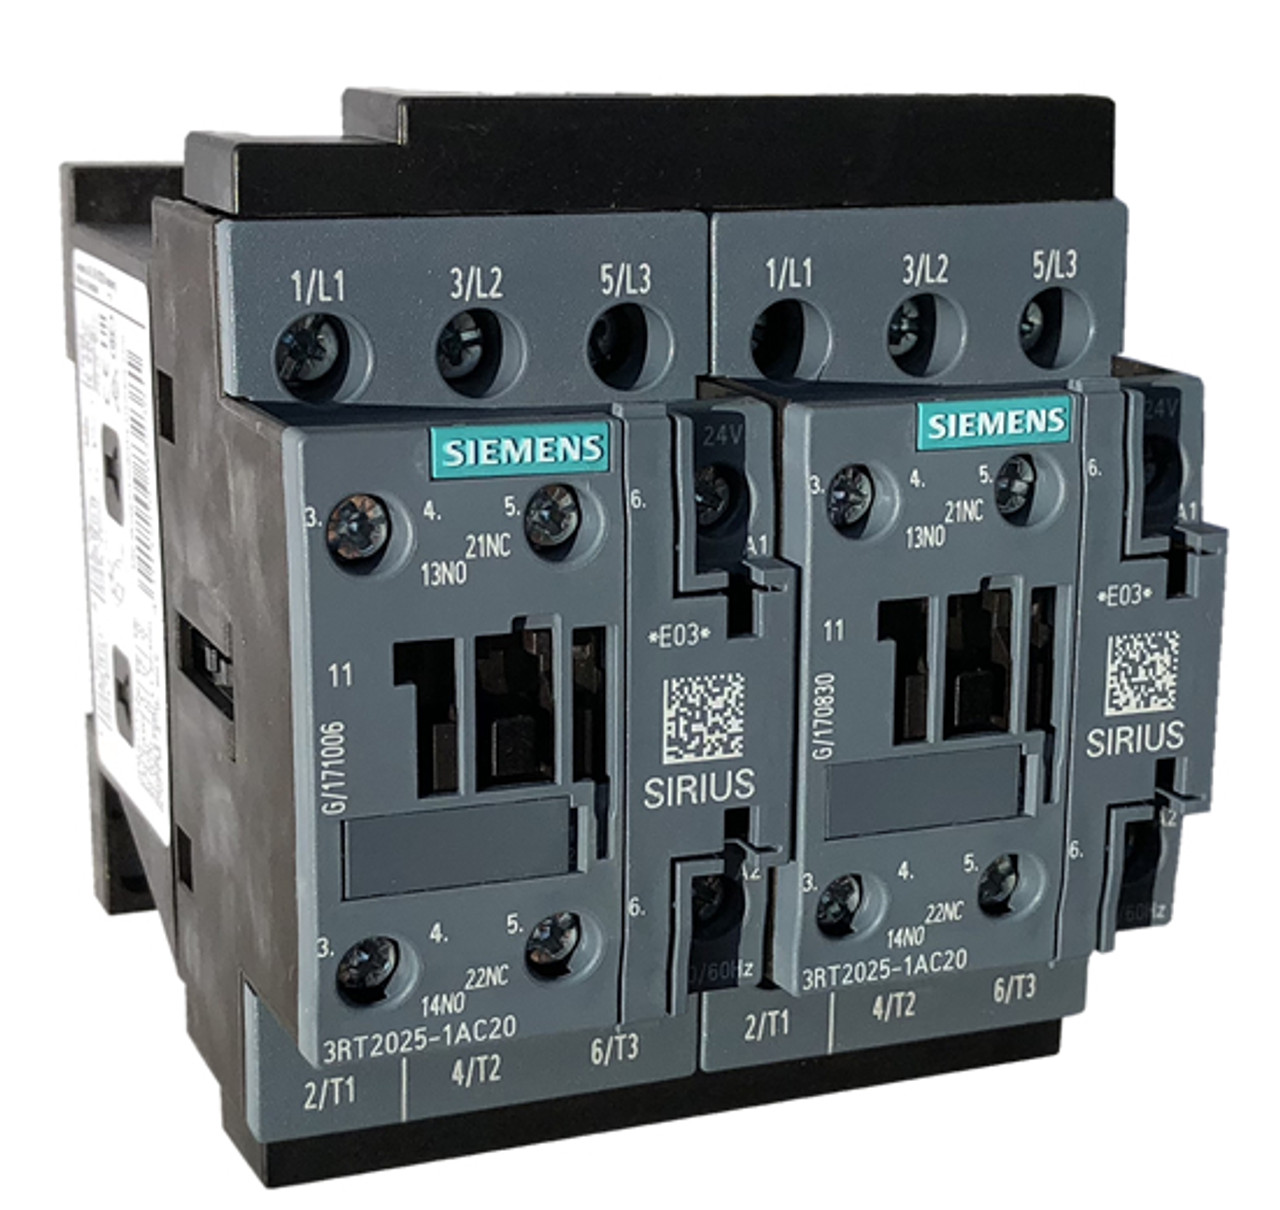 Siemens 3RA2325-8XB30-1BF4 reversing contactor